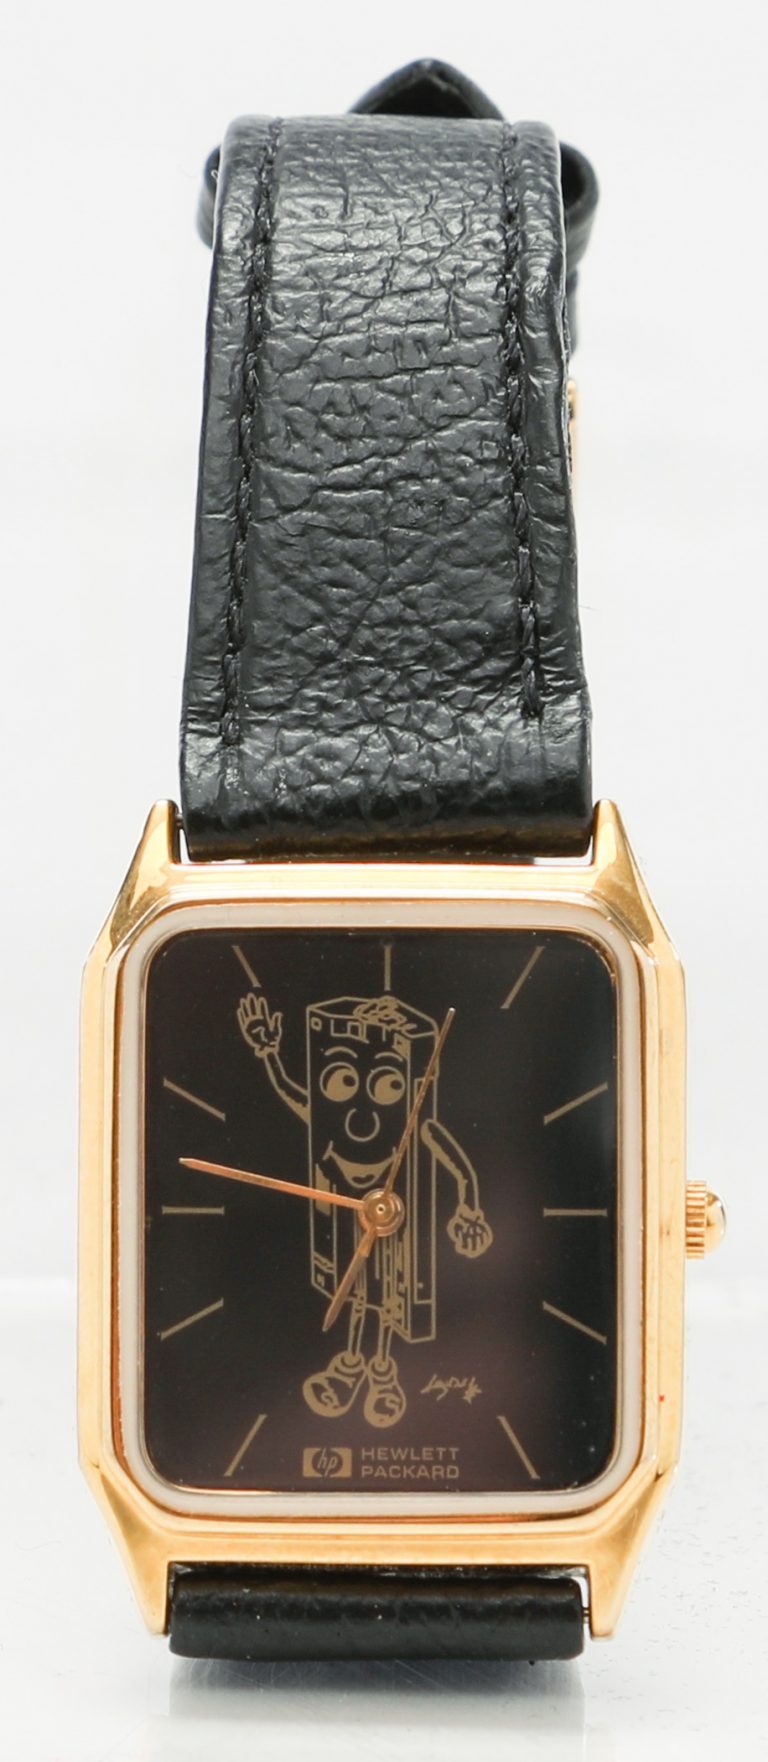 A Hewlett-Packard branded wristwatch featuring an anthropomorphic cartoon caricature of a toner cartridge.